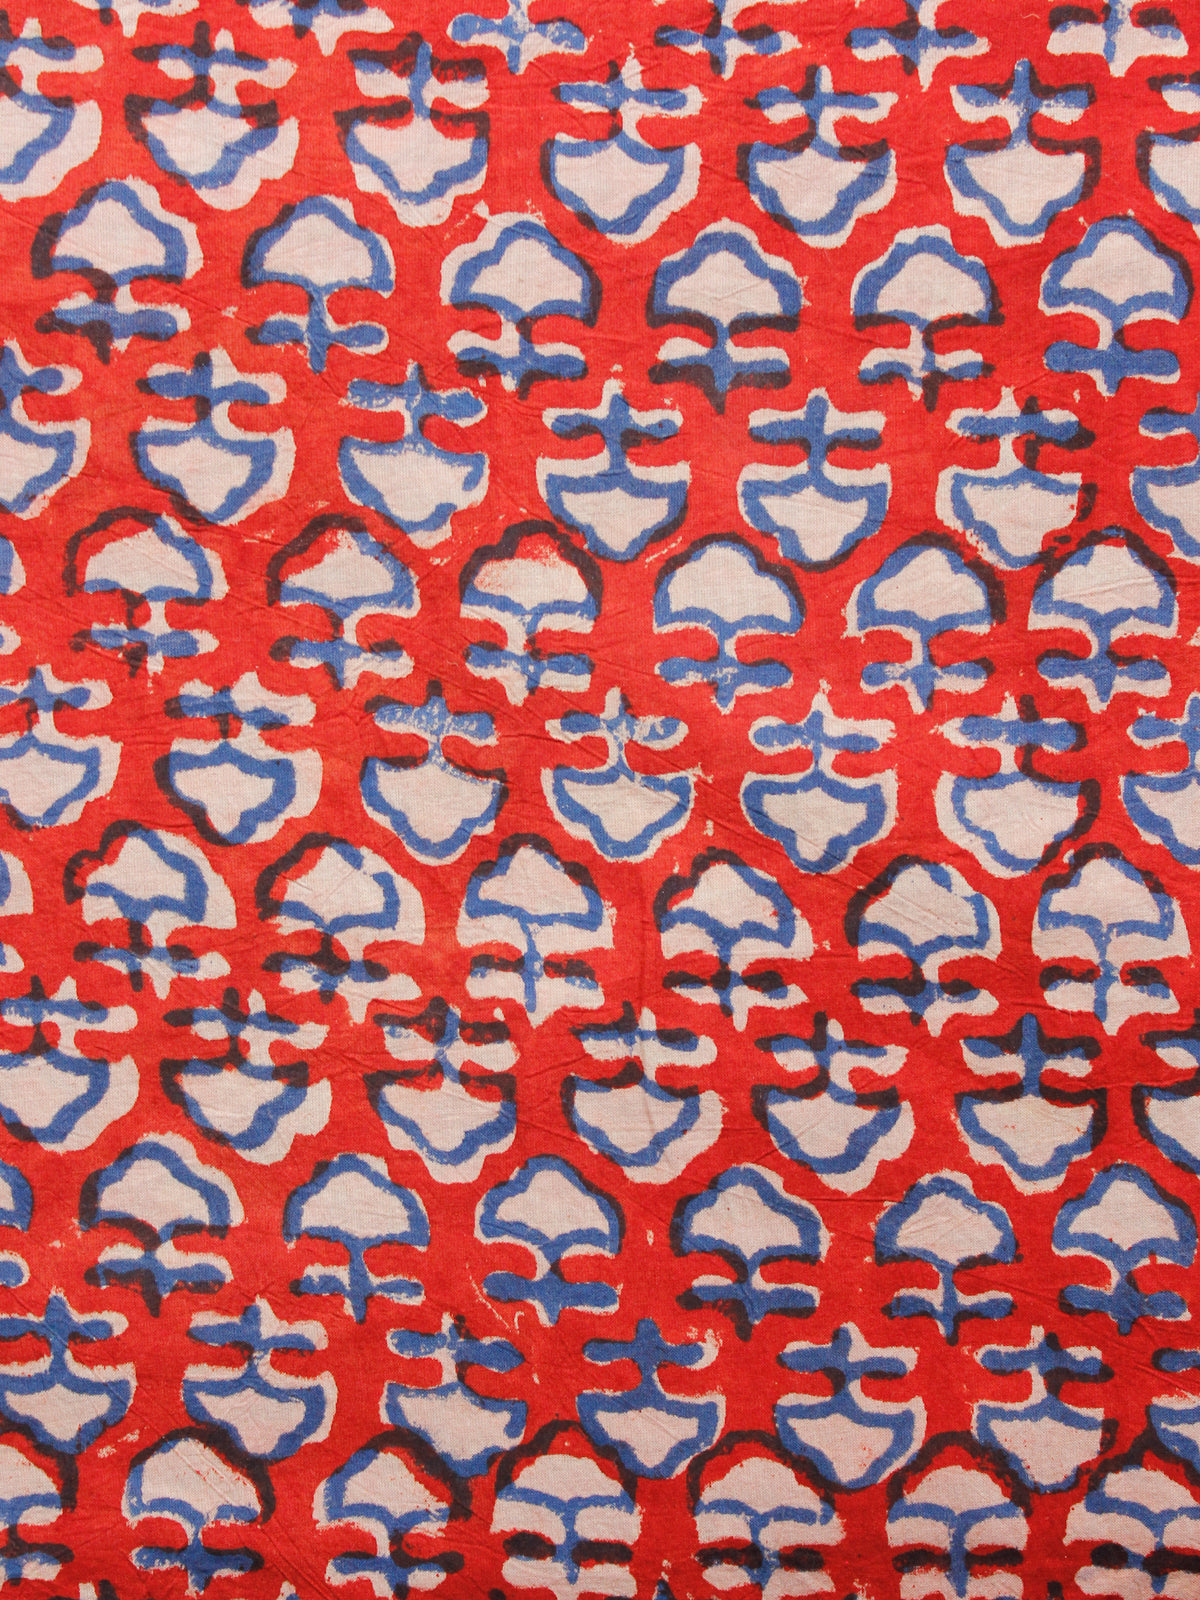 Red Indigo Beige Hand Block Printed Cotton Fabric Per Meter - F001F1382